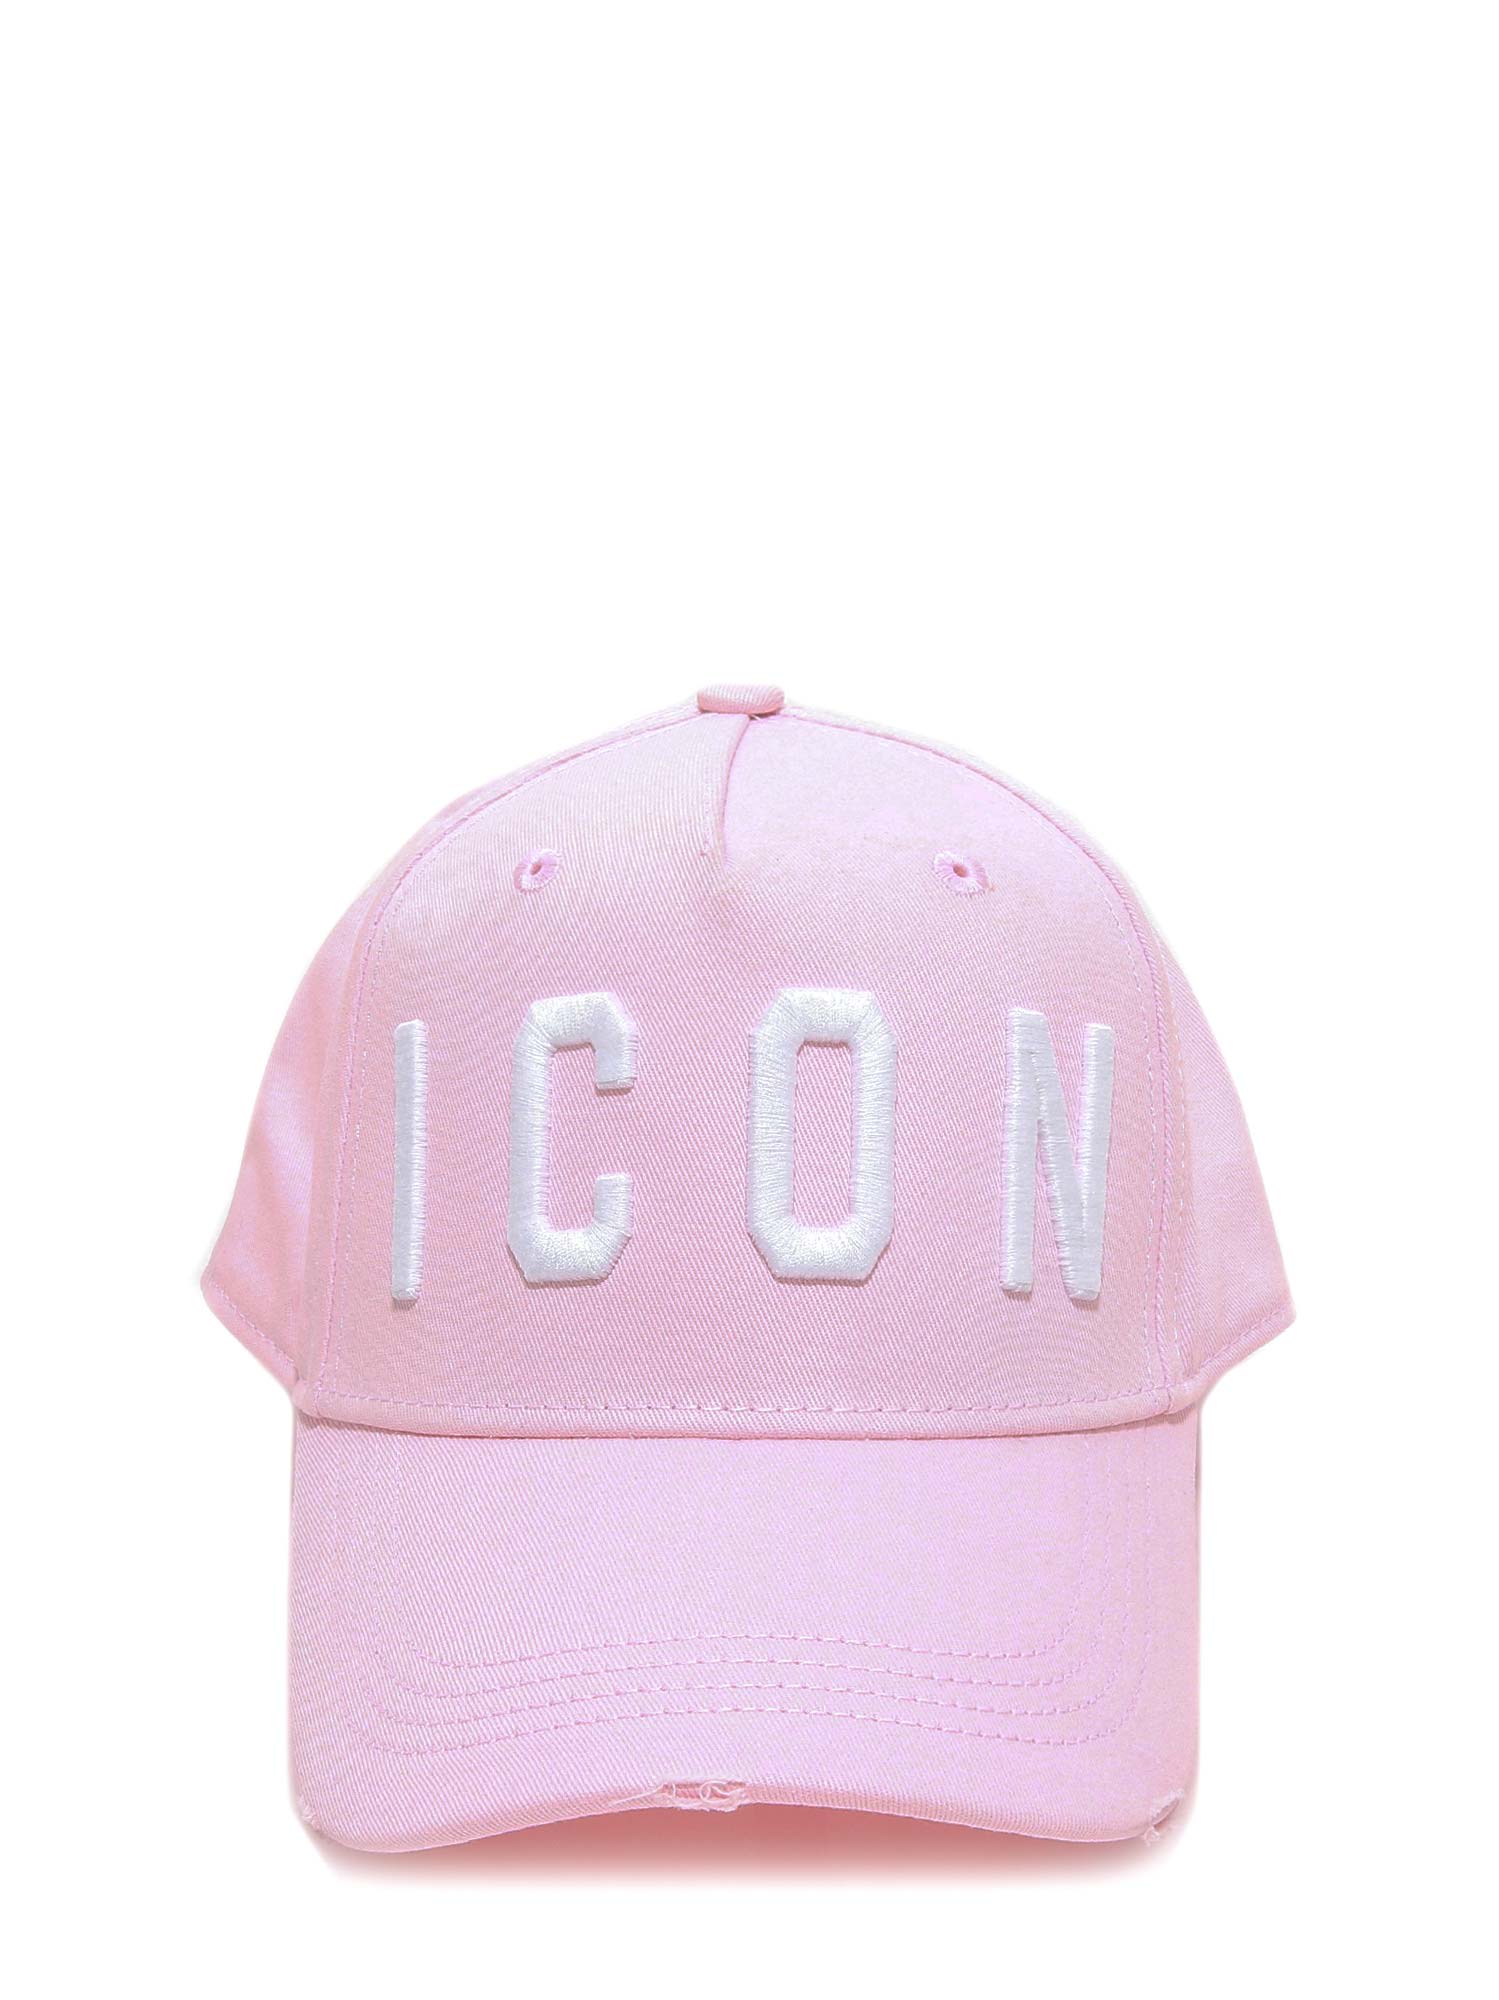 dsquared2 cap pink